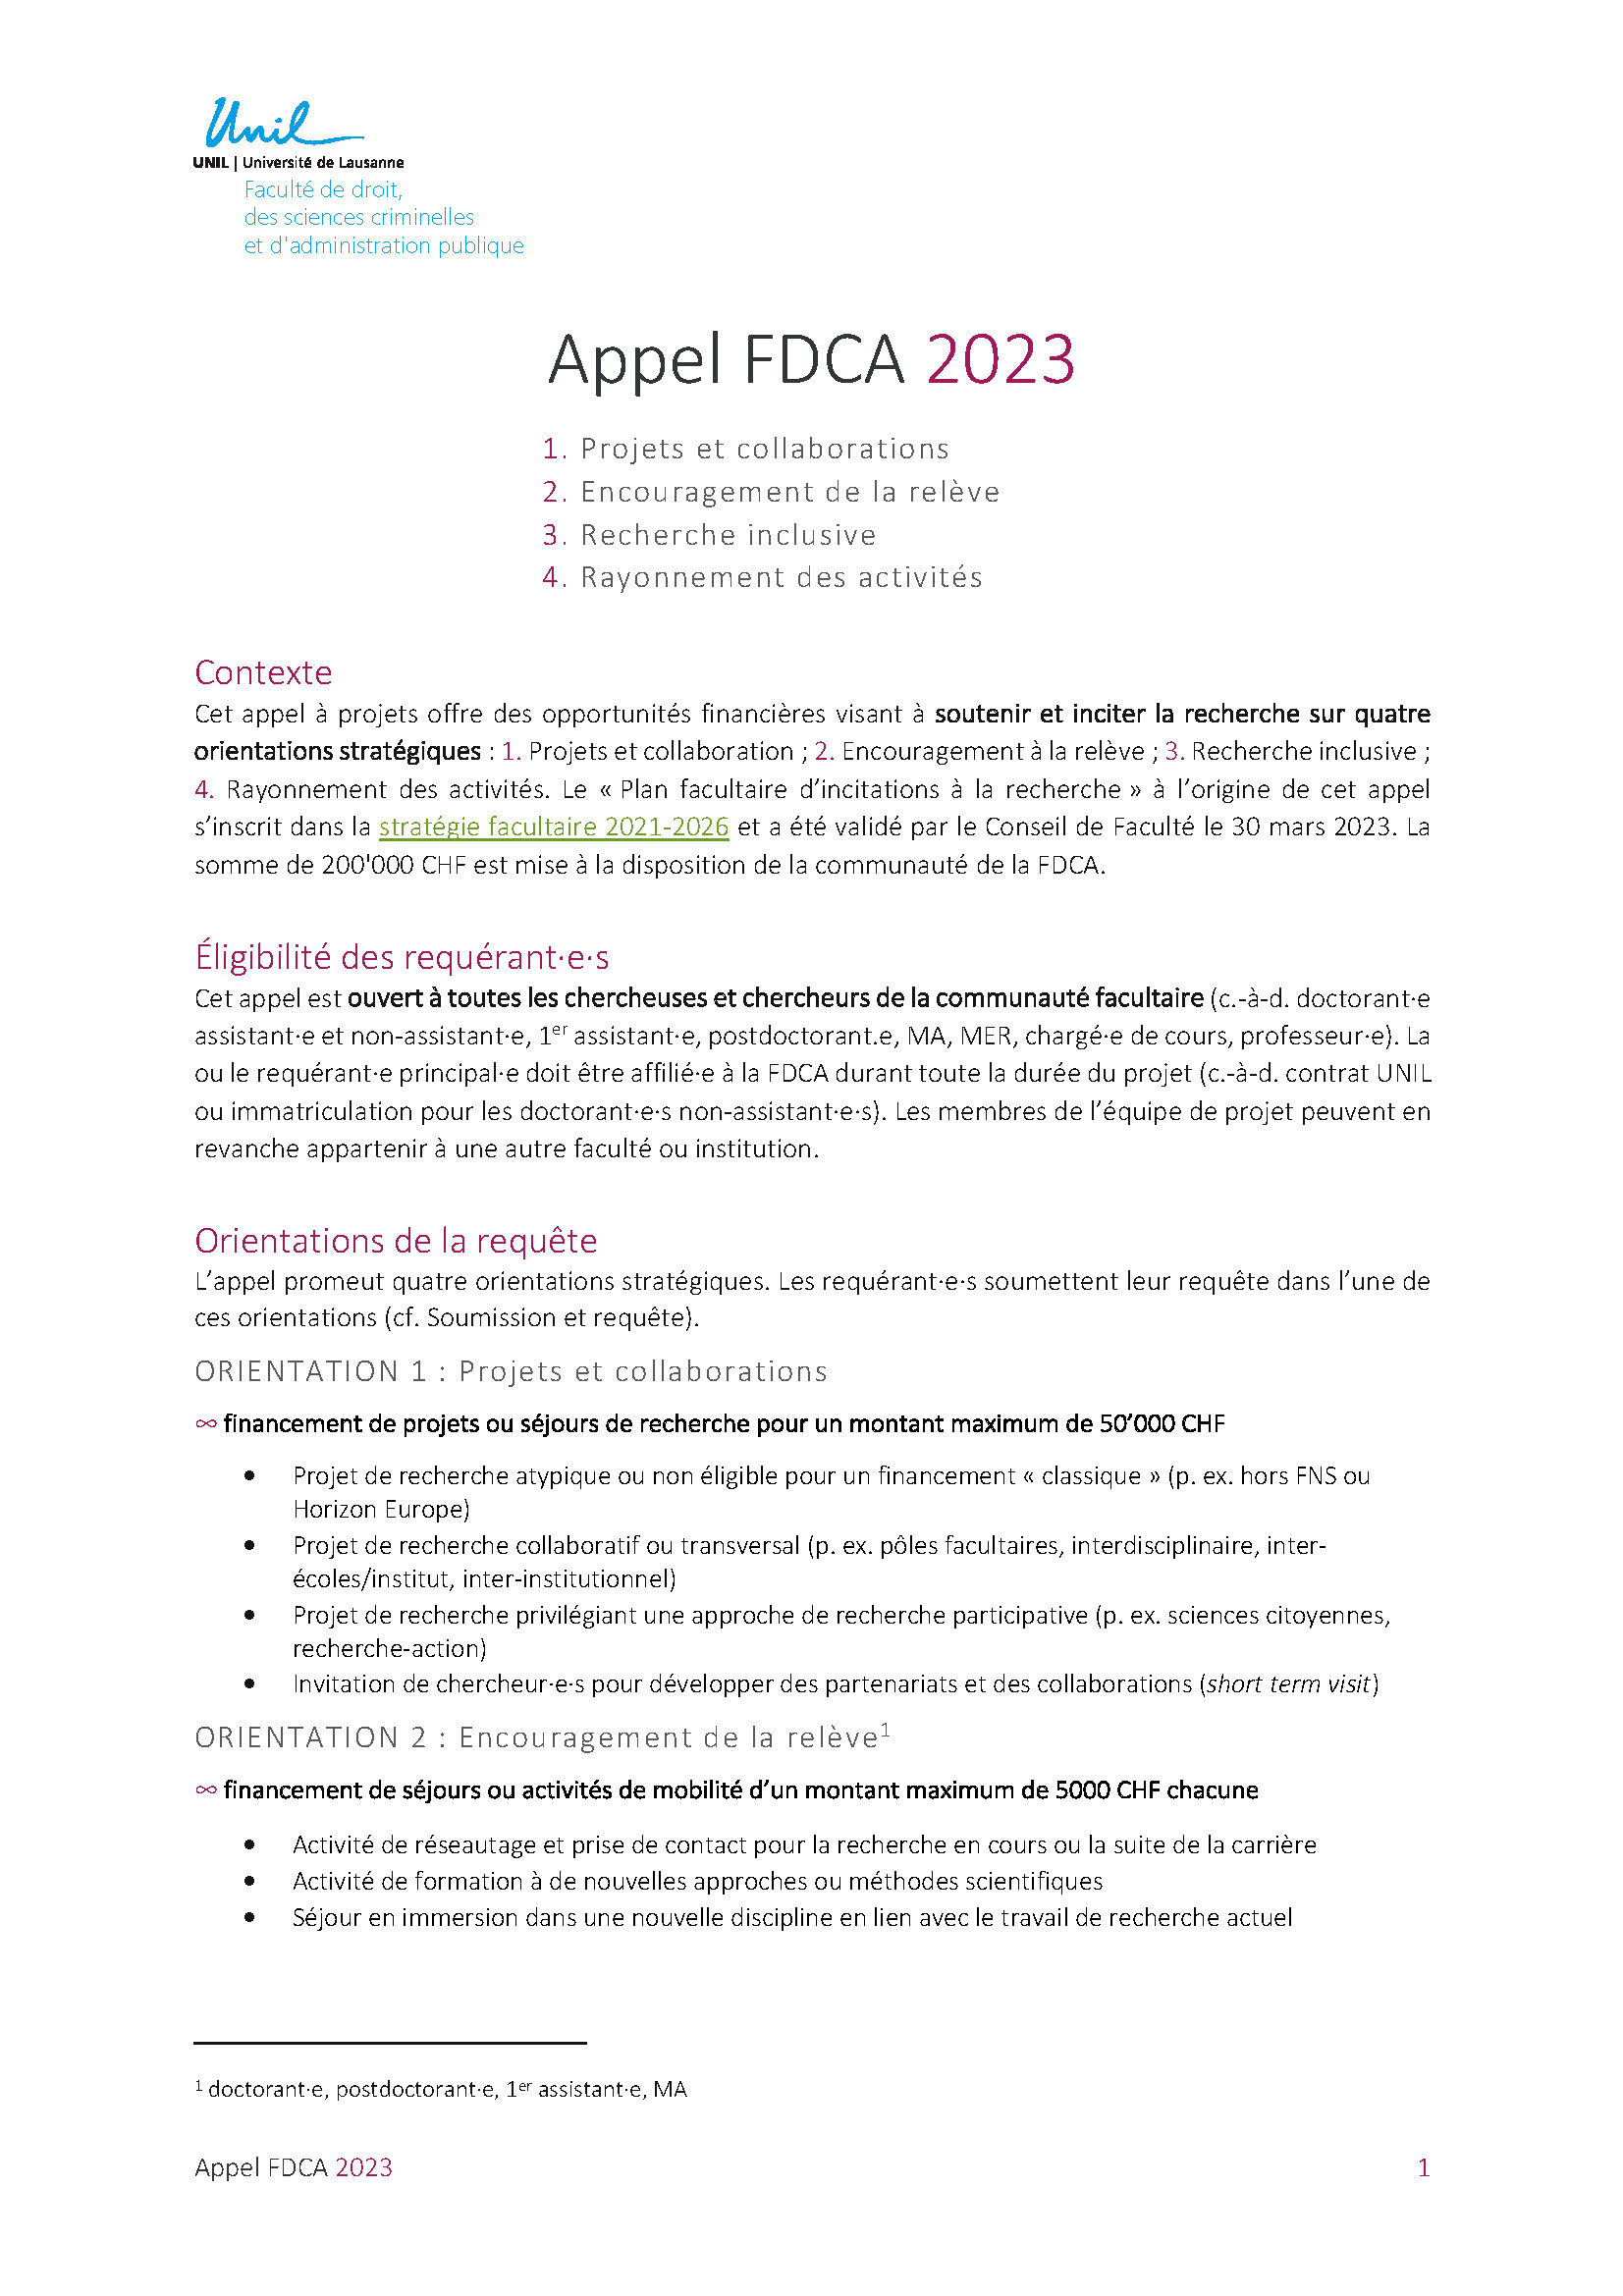 AppelFDCA_2023_Recherche_20230501.pdf